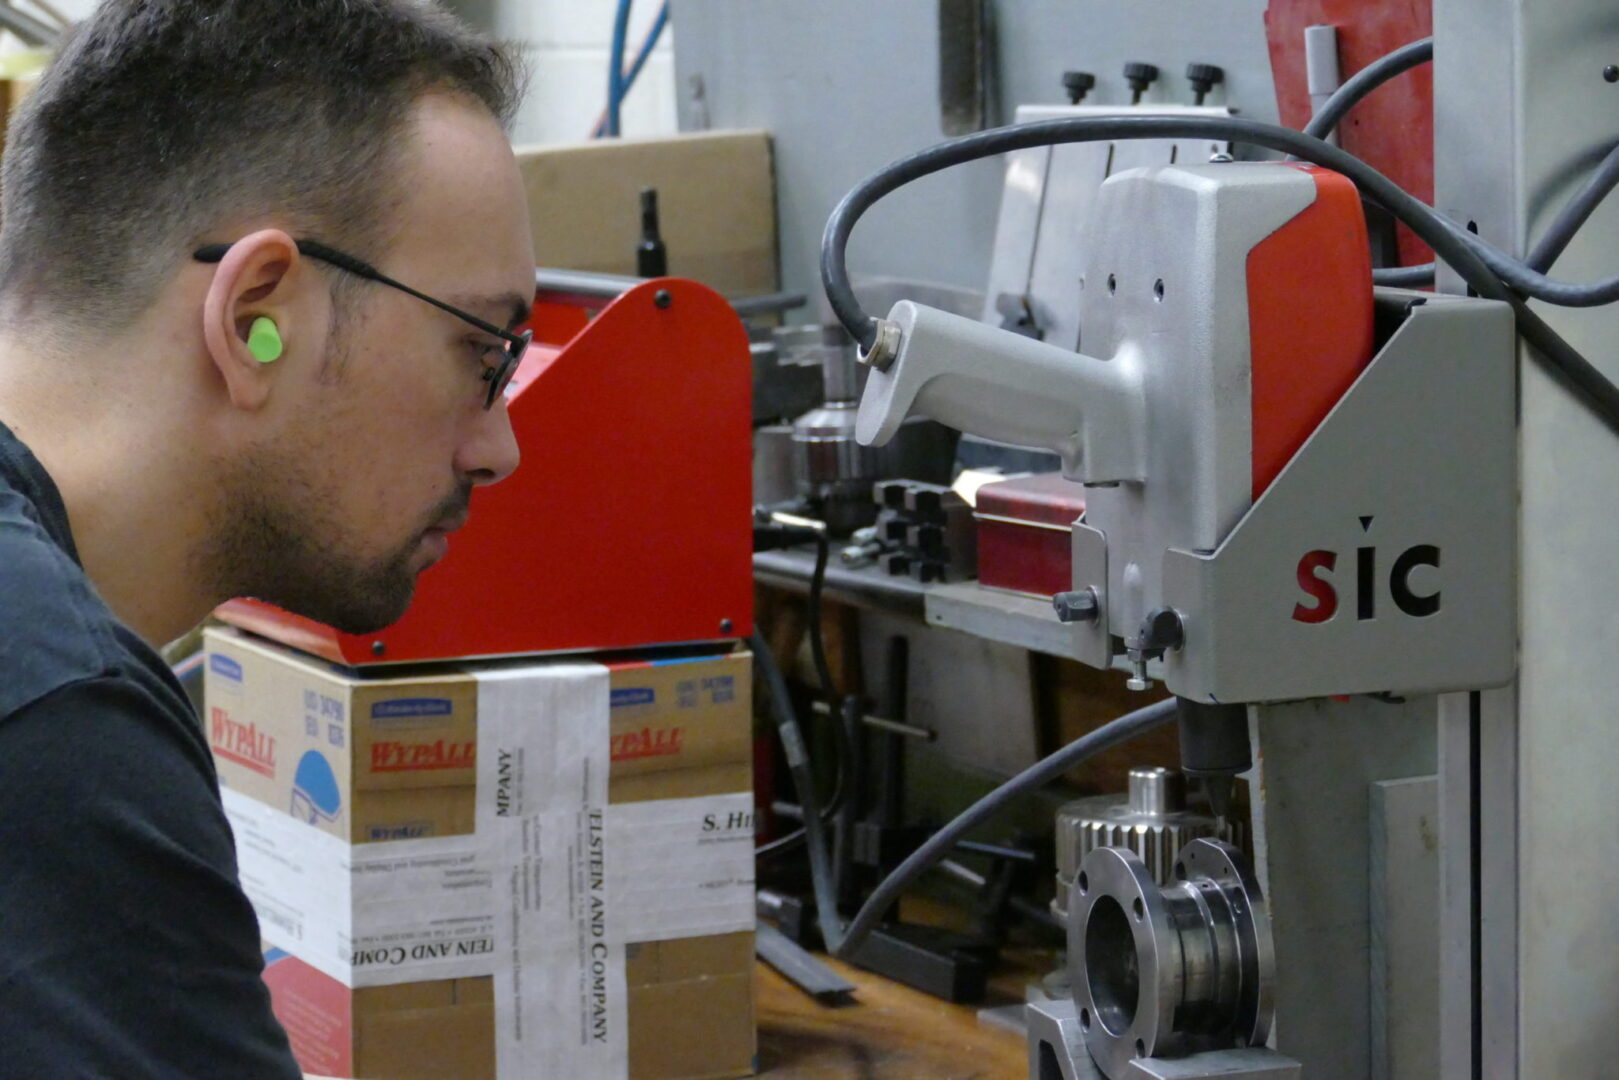 A man wearing ear plugs while using machinery